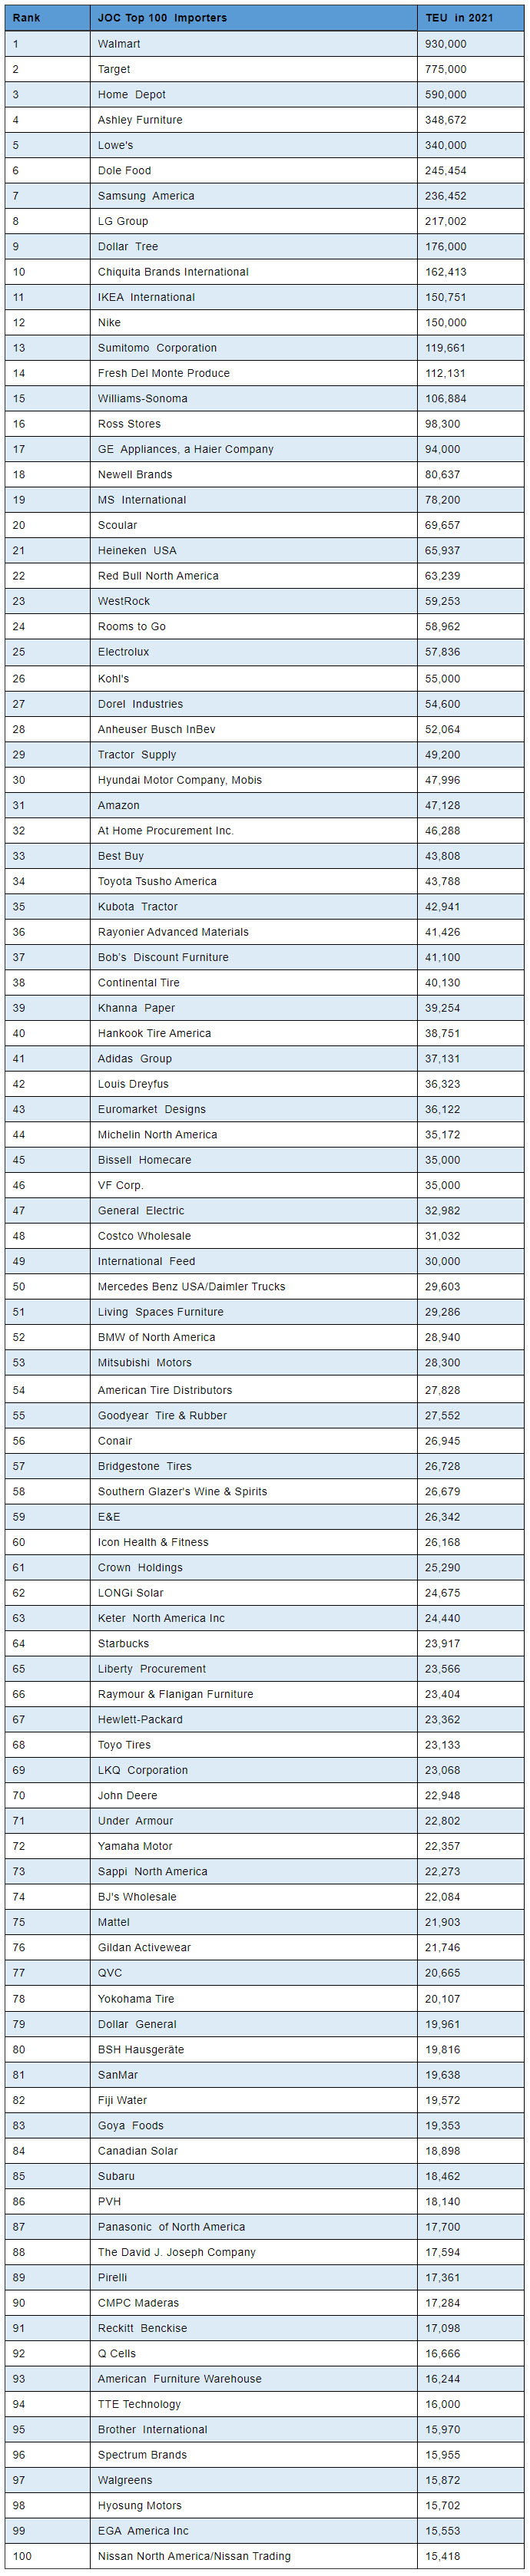 JOC Top 100 US Importer Rankings 2021